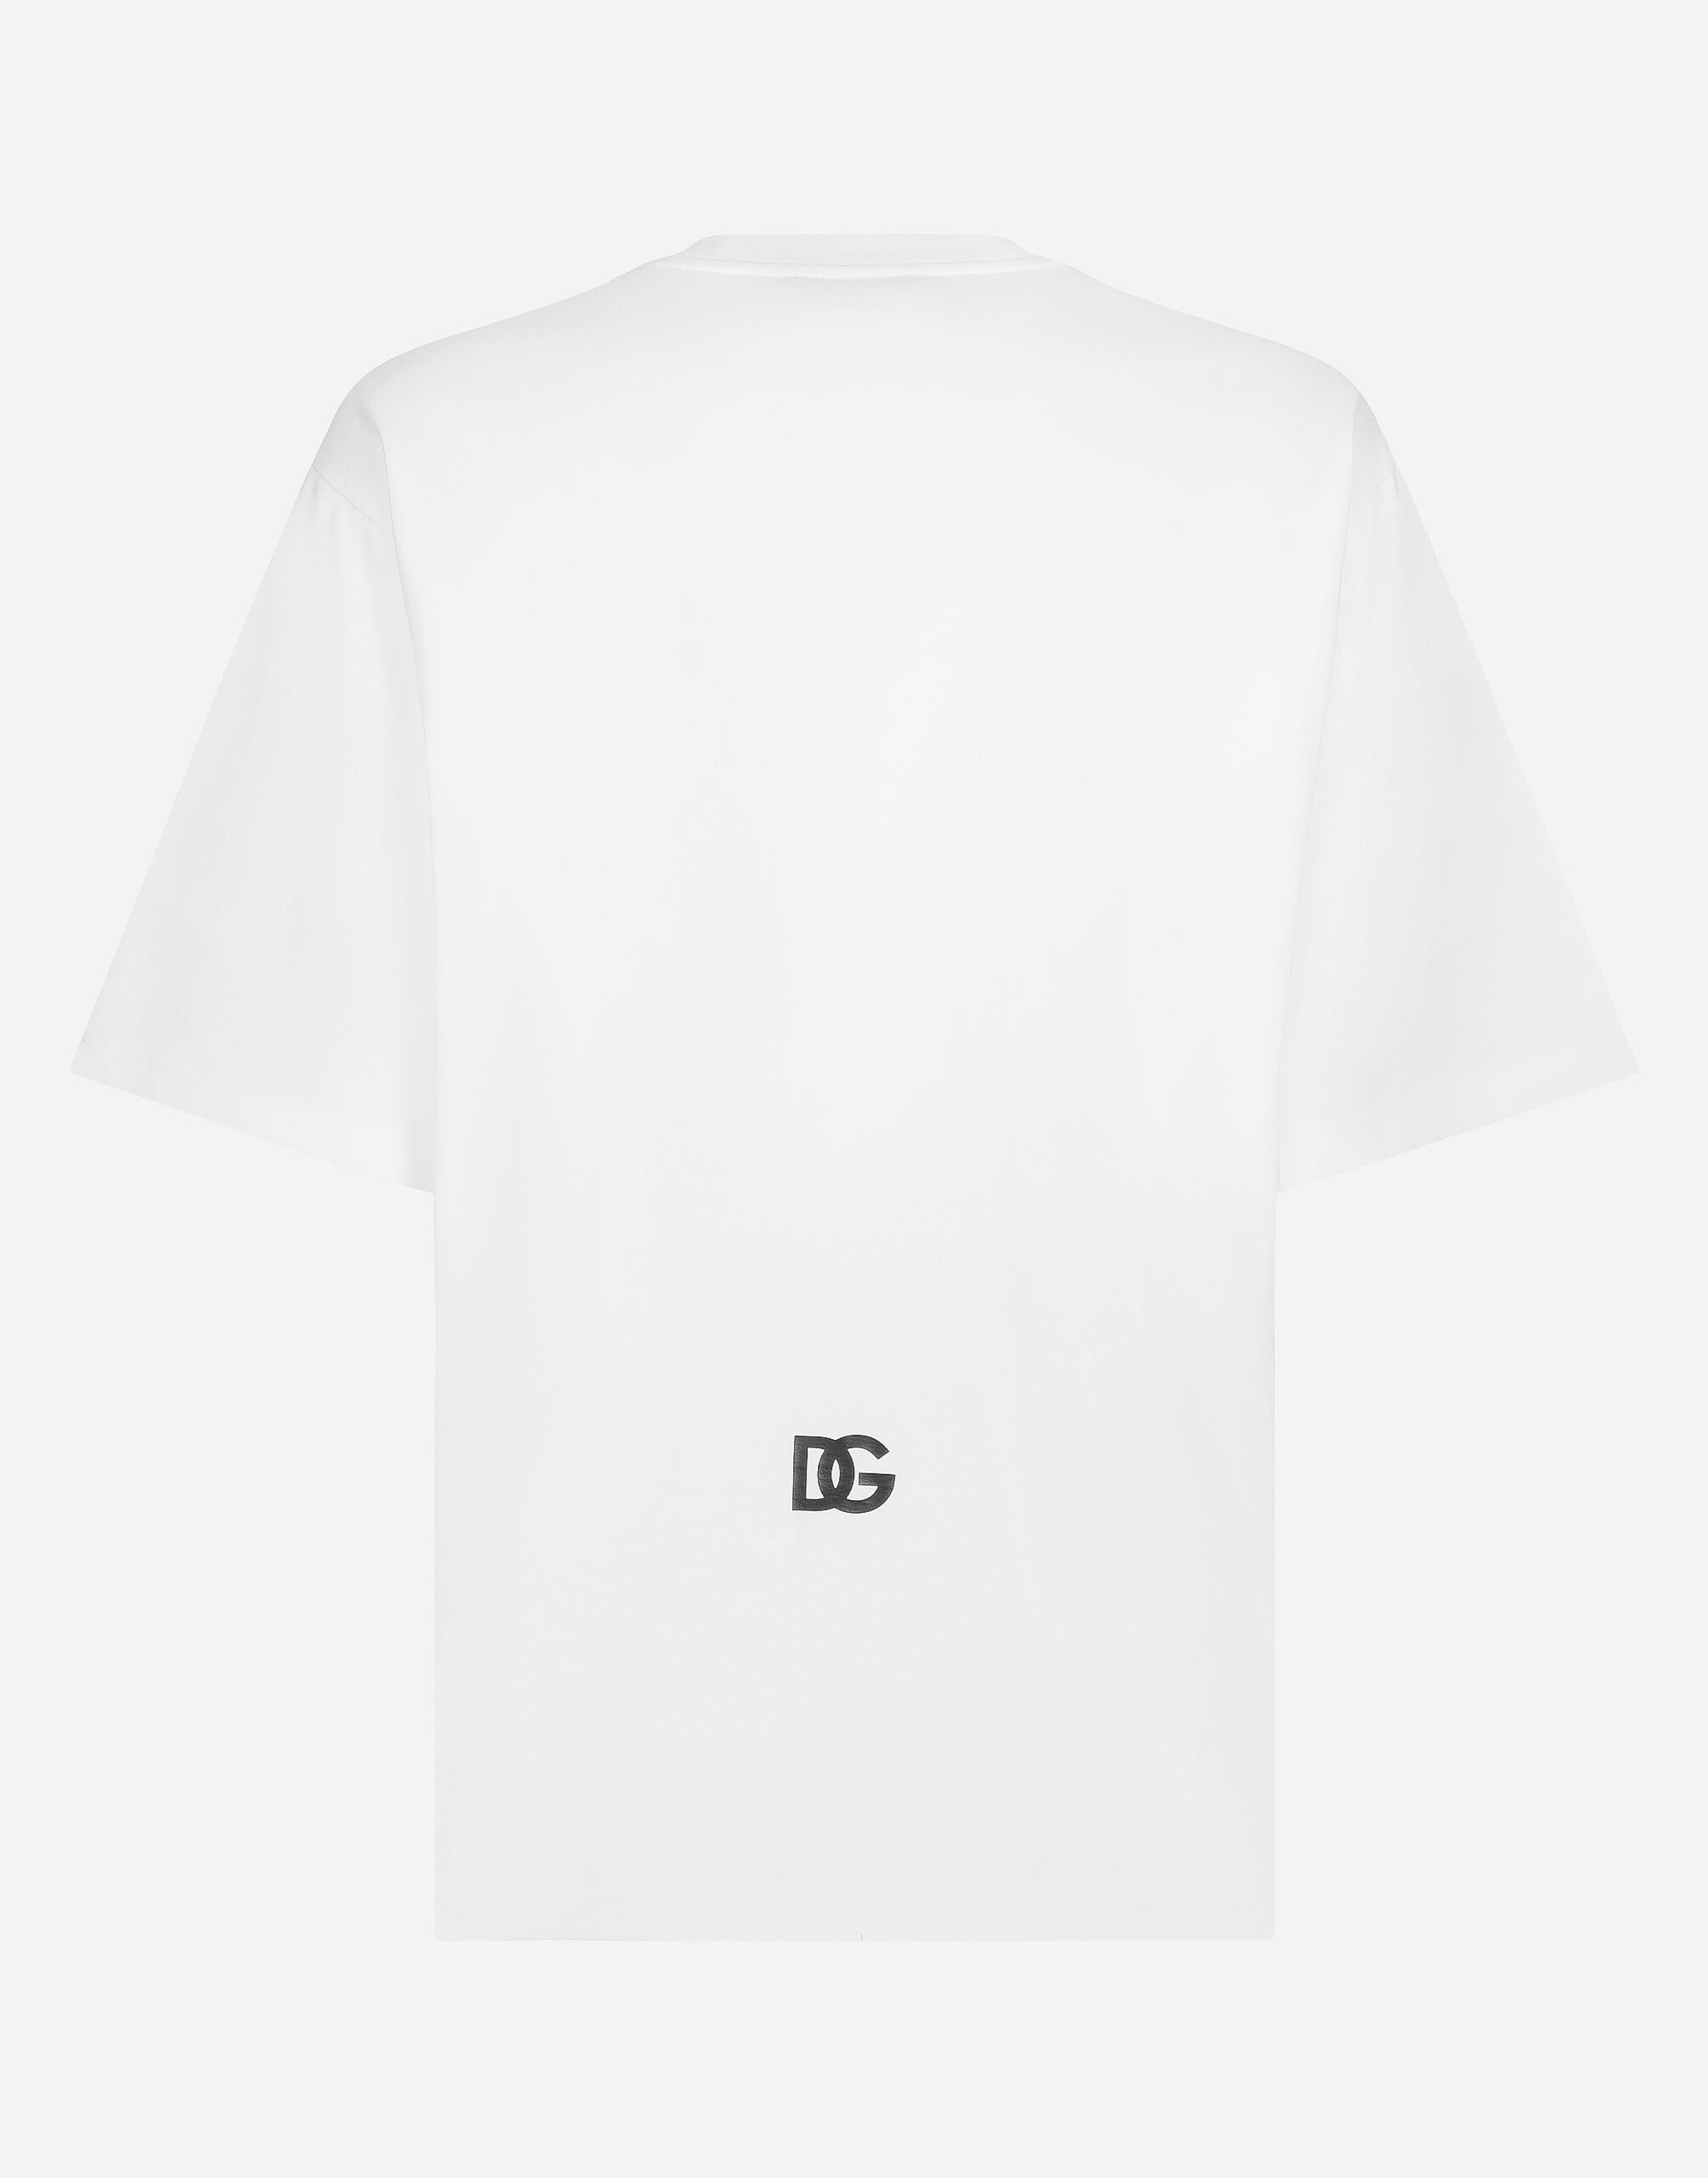 Short-sleeved T-shirt with DG logo print